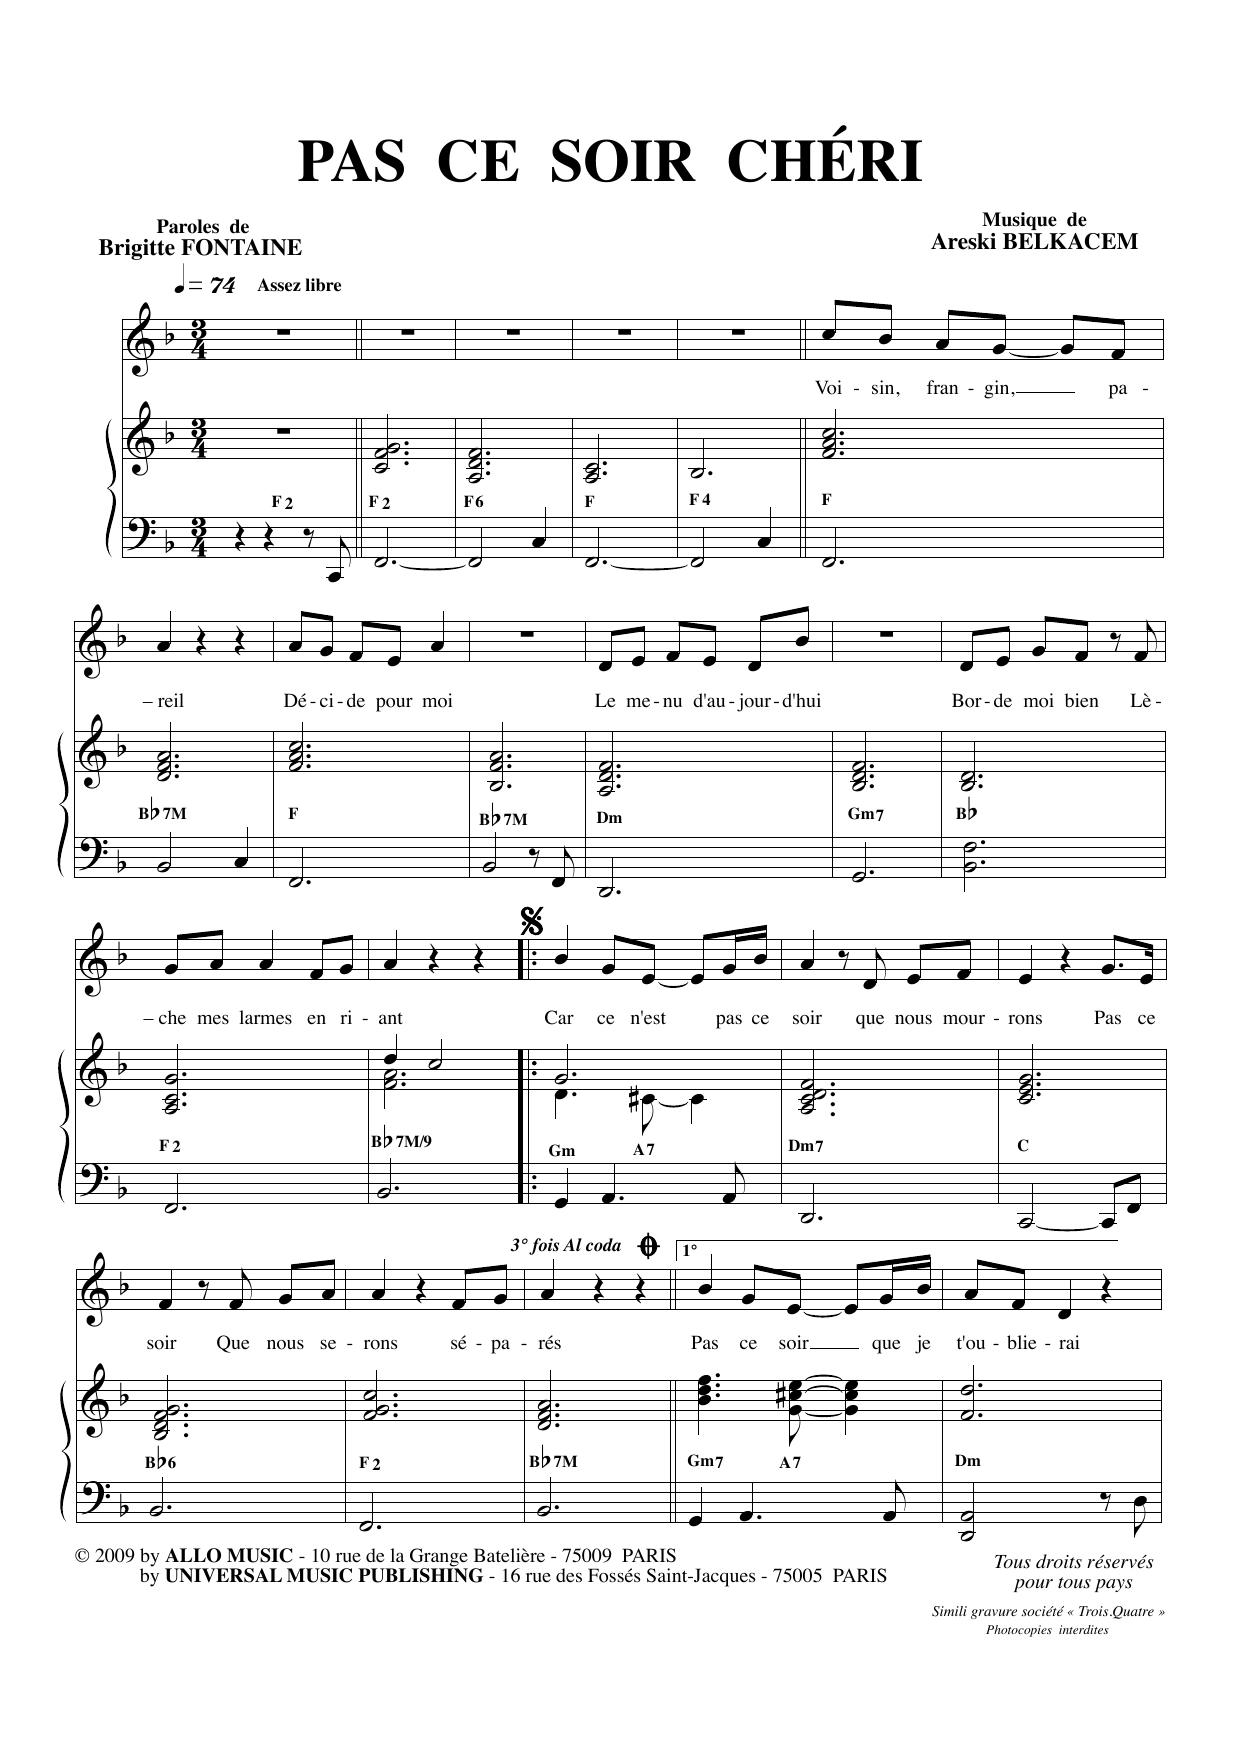 Brigitte Fontaine & Areski Belkacem Pas Ce Soir Chéri Sheet Music Notes & Chords for Piano & Vocal - Download or Print PDF